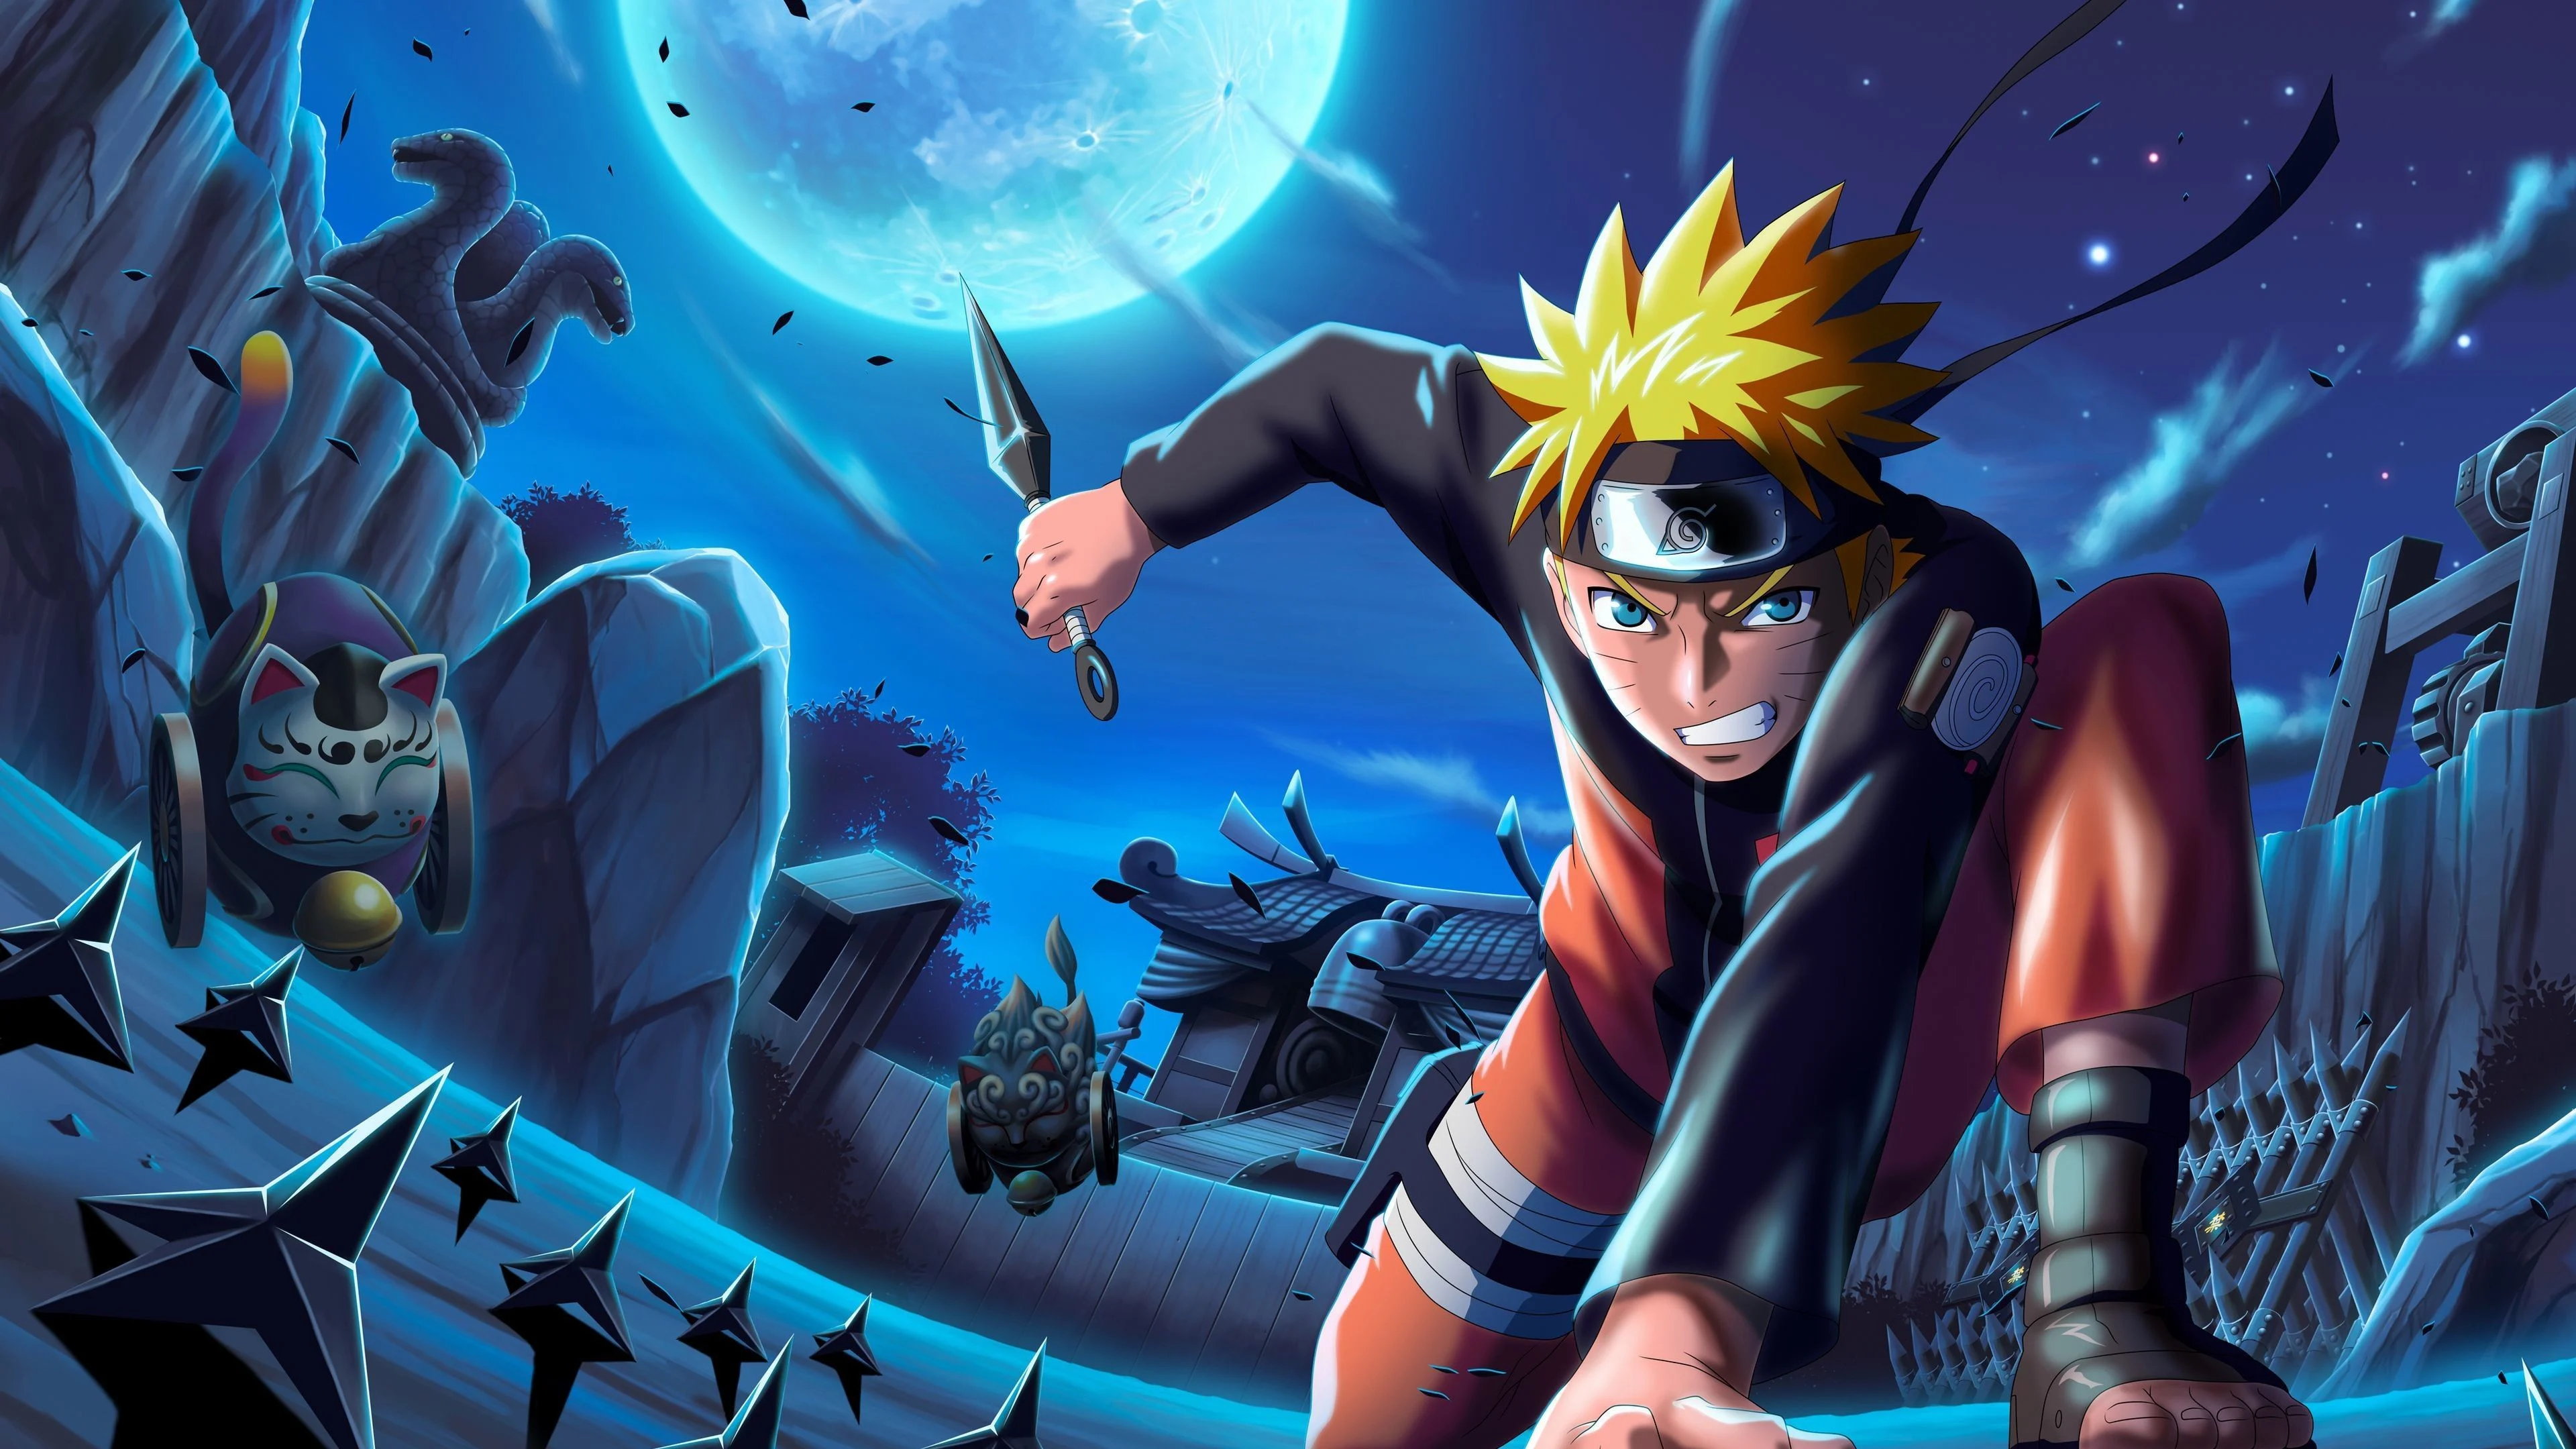 Naruto vs Sasuke the final battle 3D or 2d if u prefer that